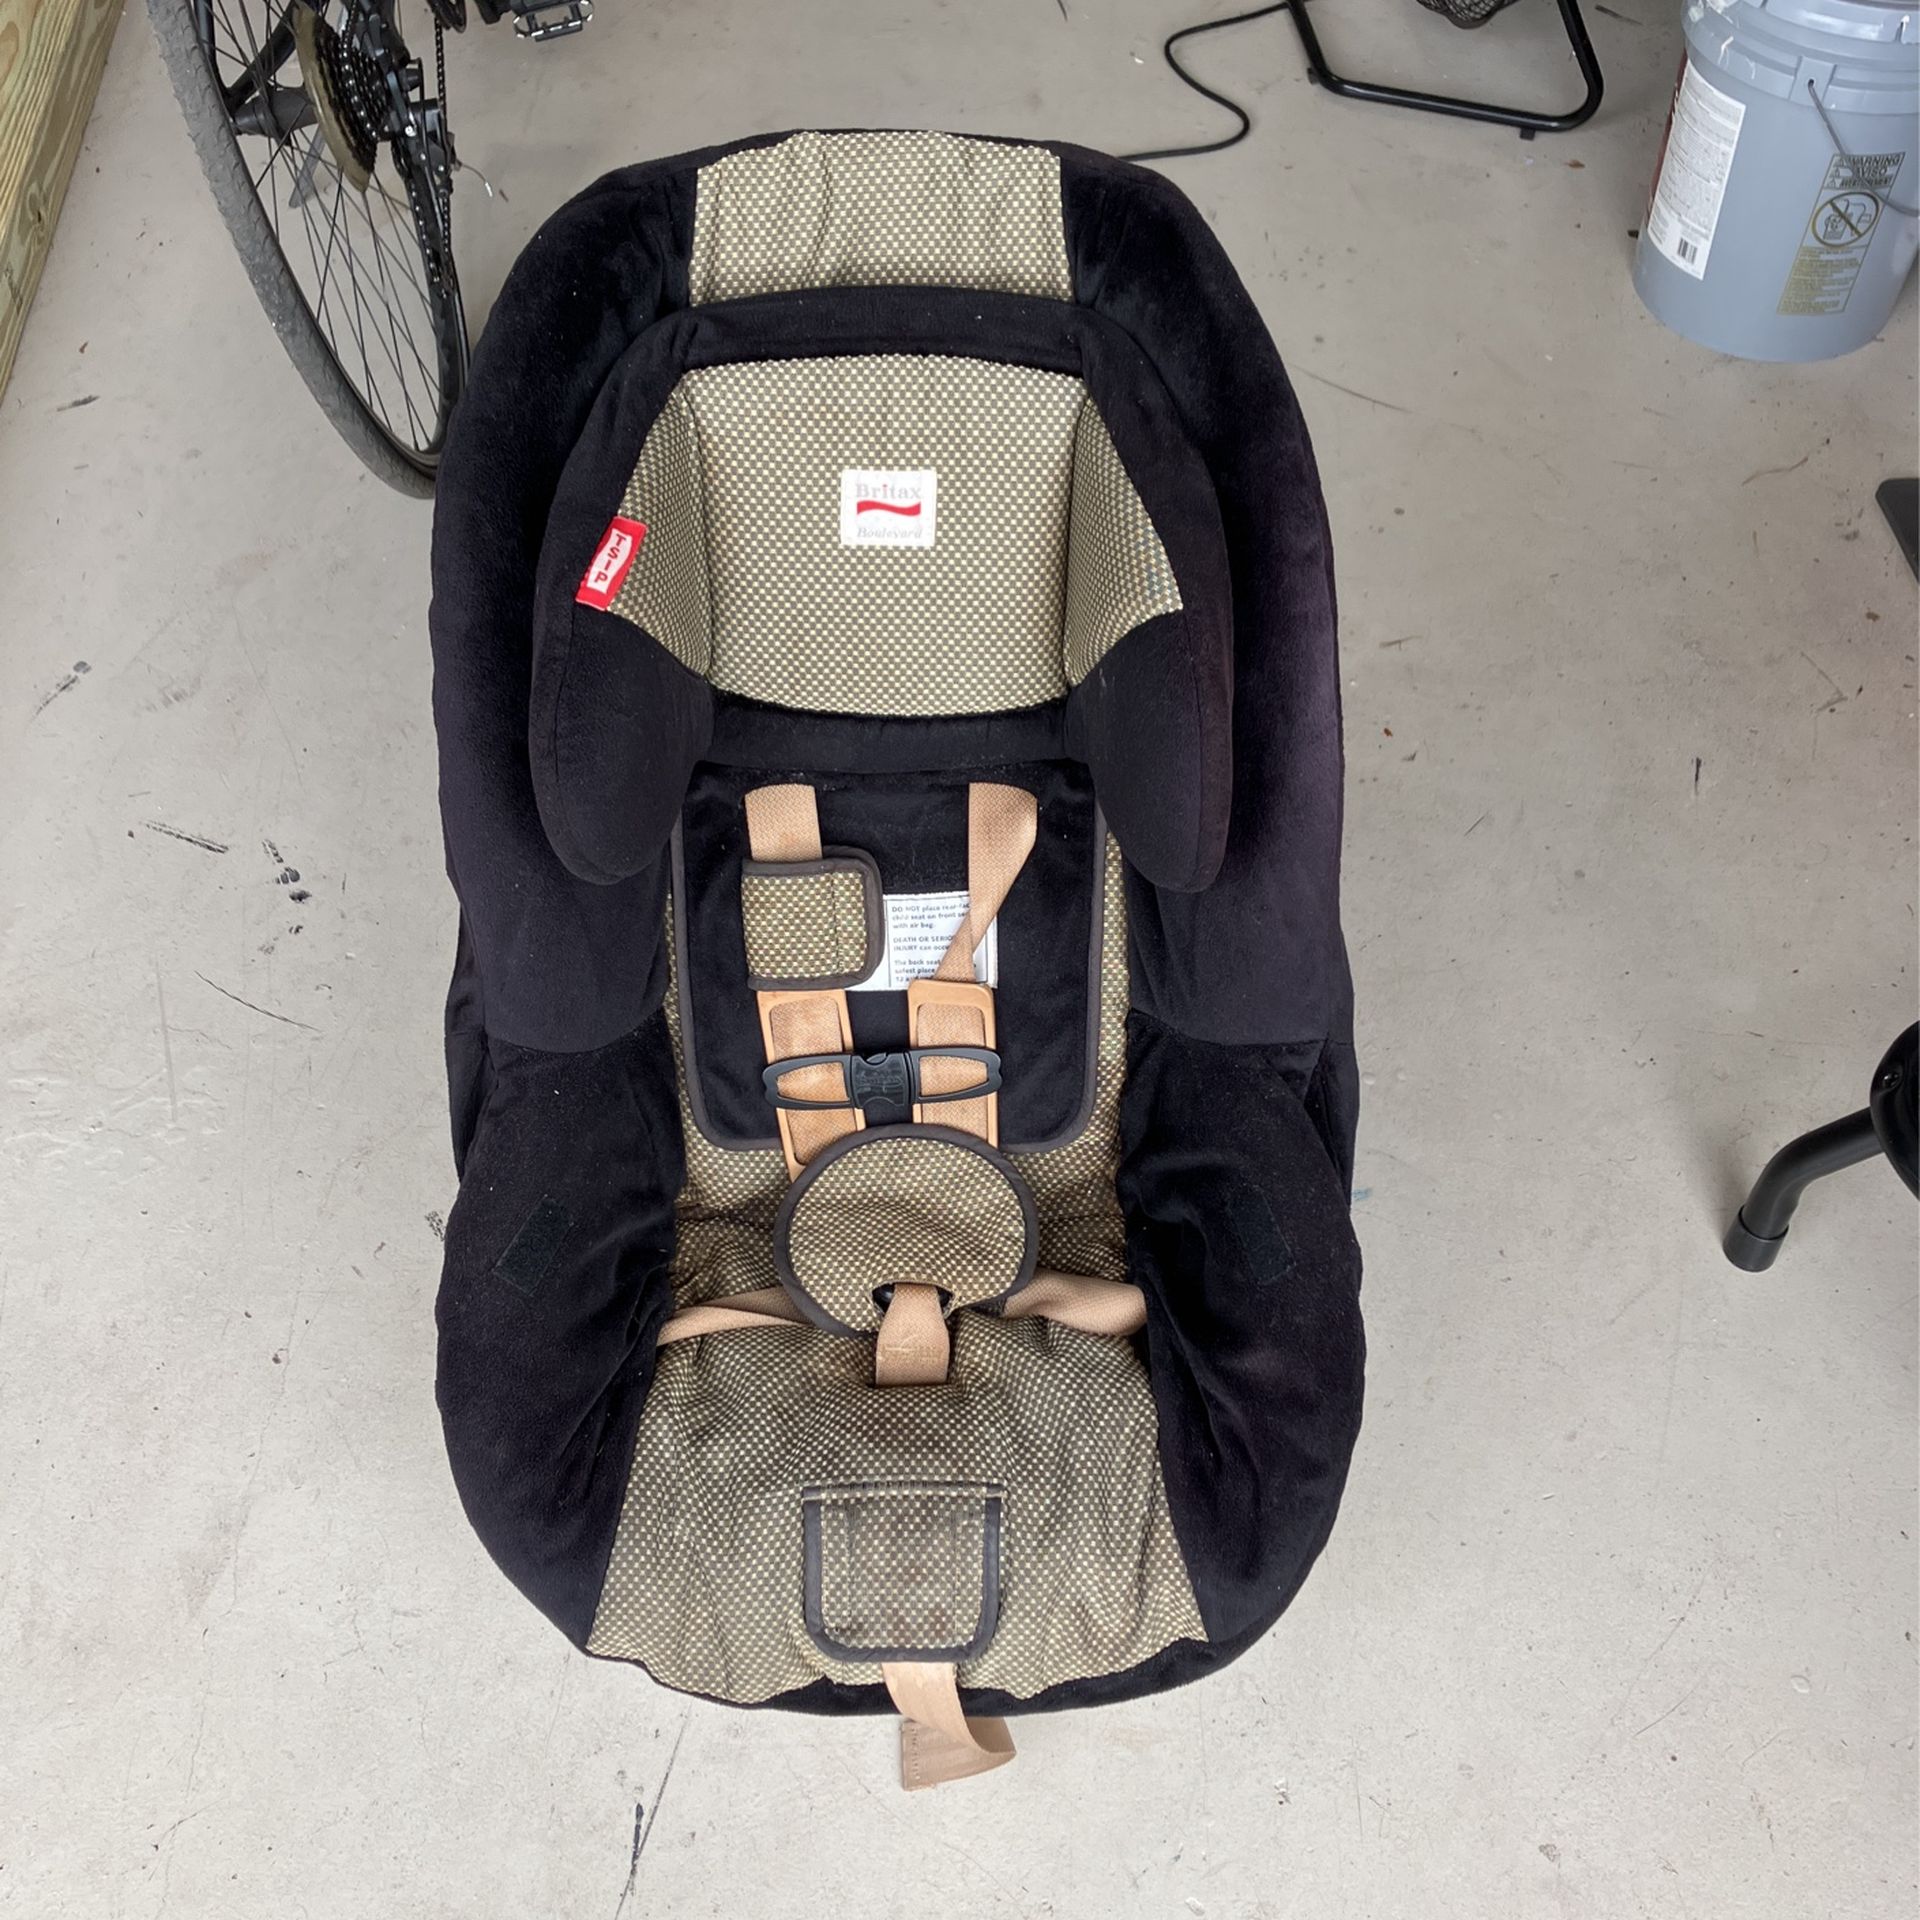 Britax Boulevard Infant Child Car Seat